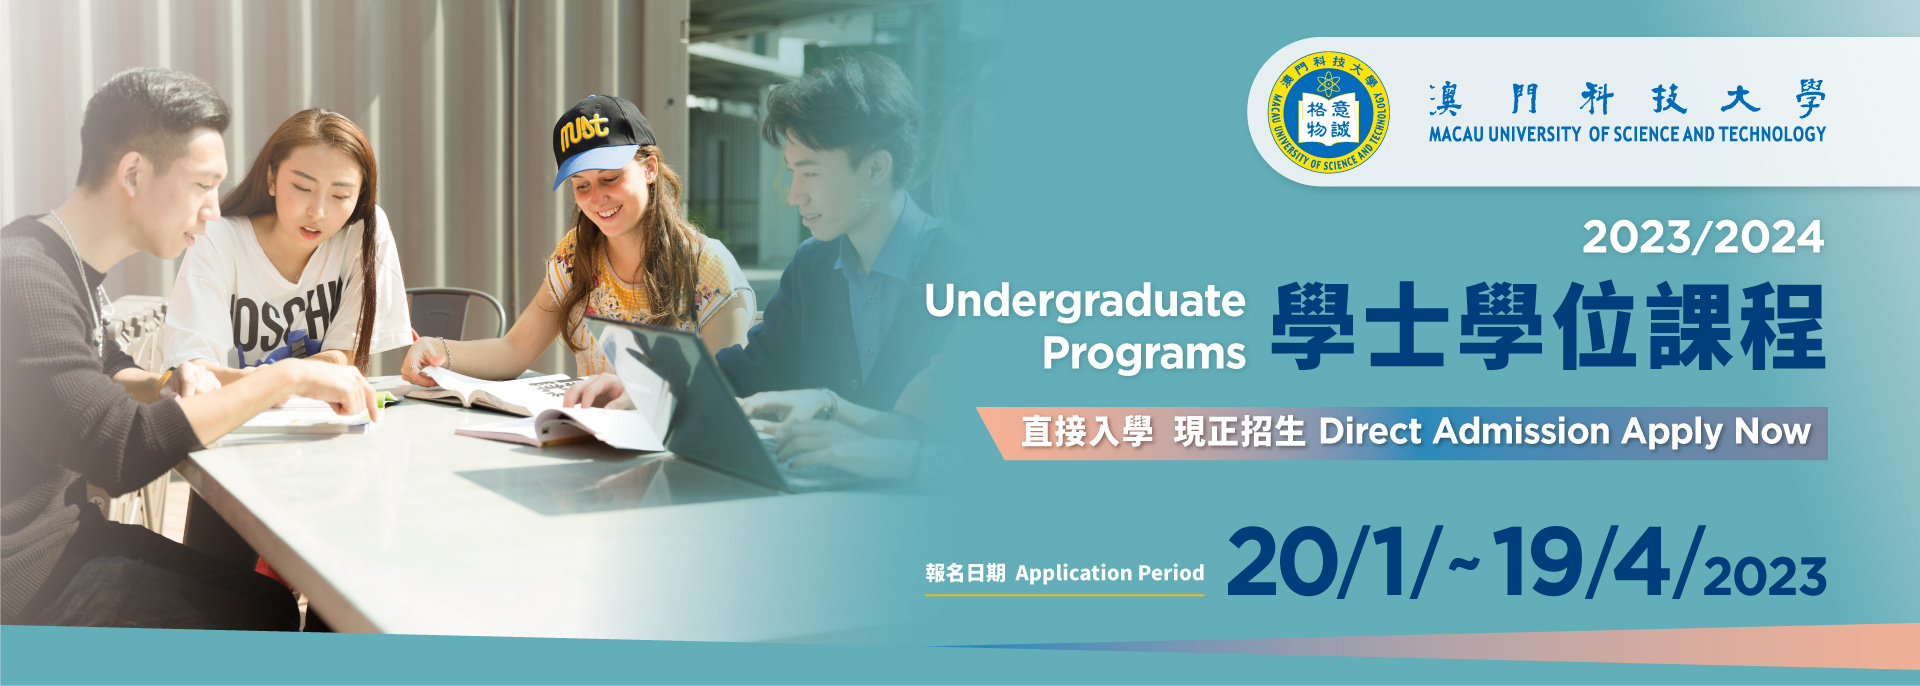 2023/2024 Undergraduate Programs Direct Admission Apply Now